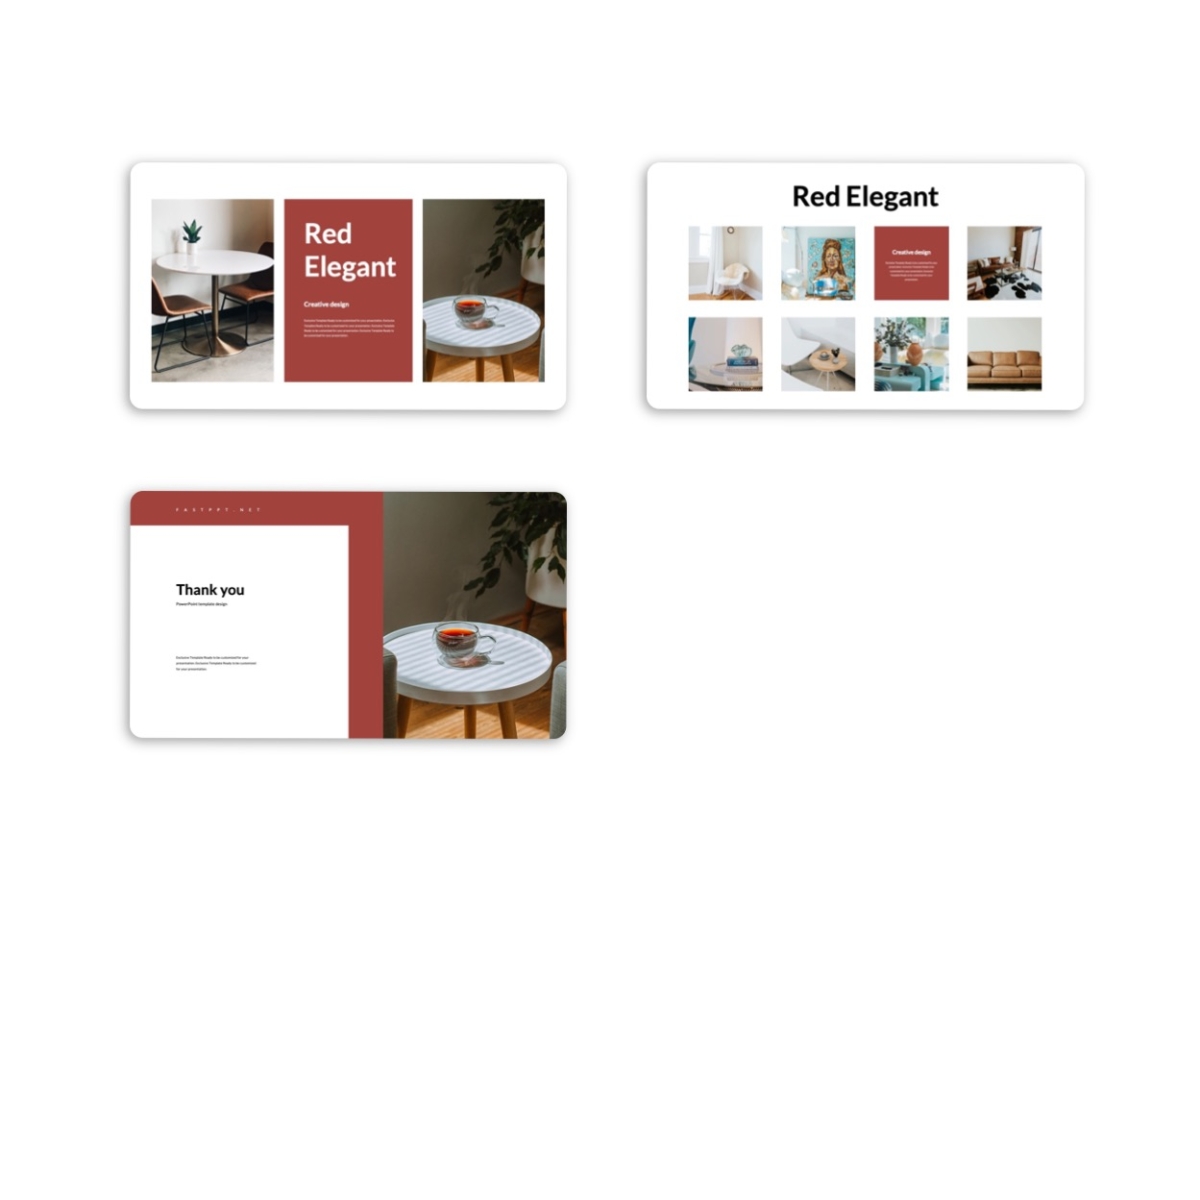 Google Slides-Red Elegant Interior Project Template